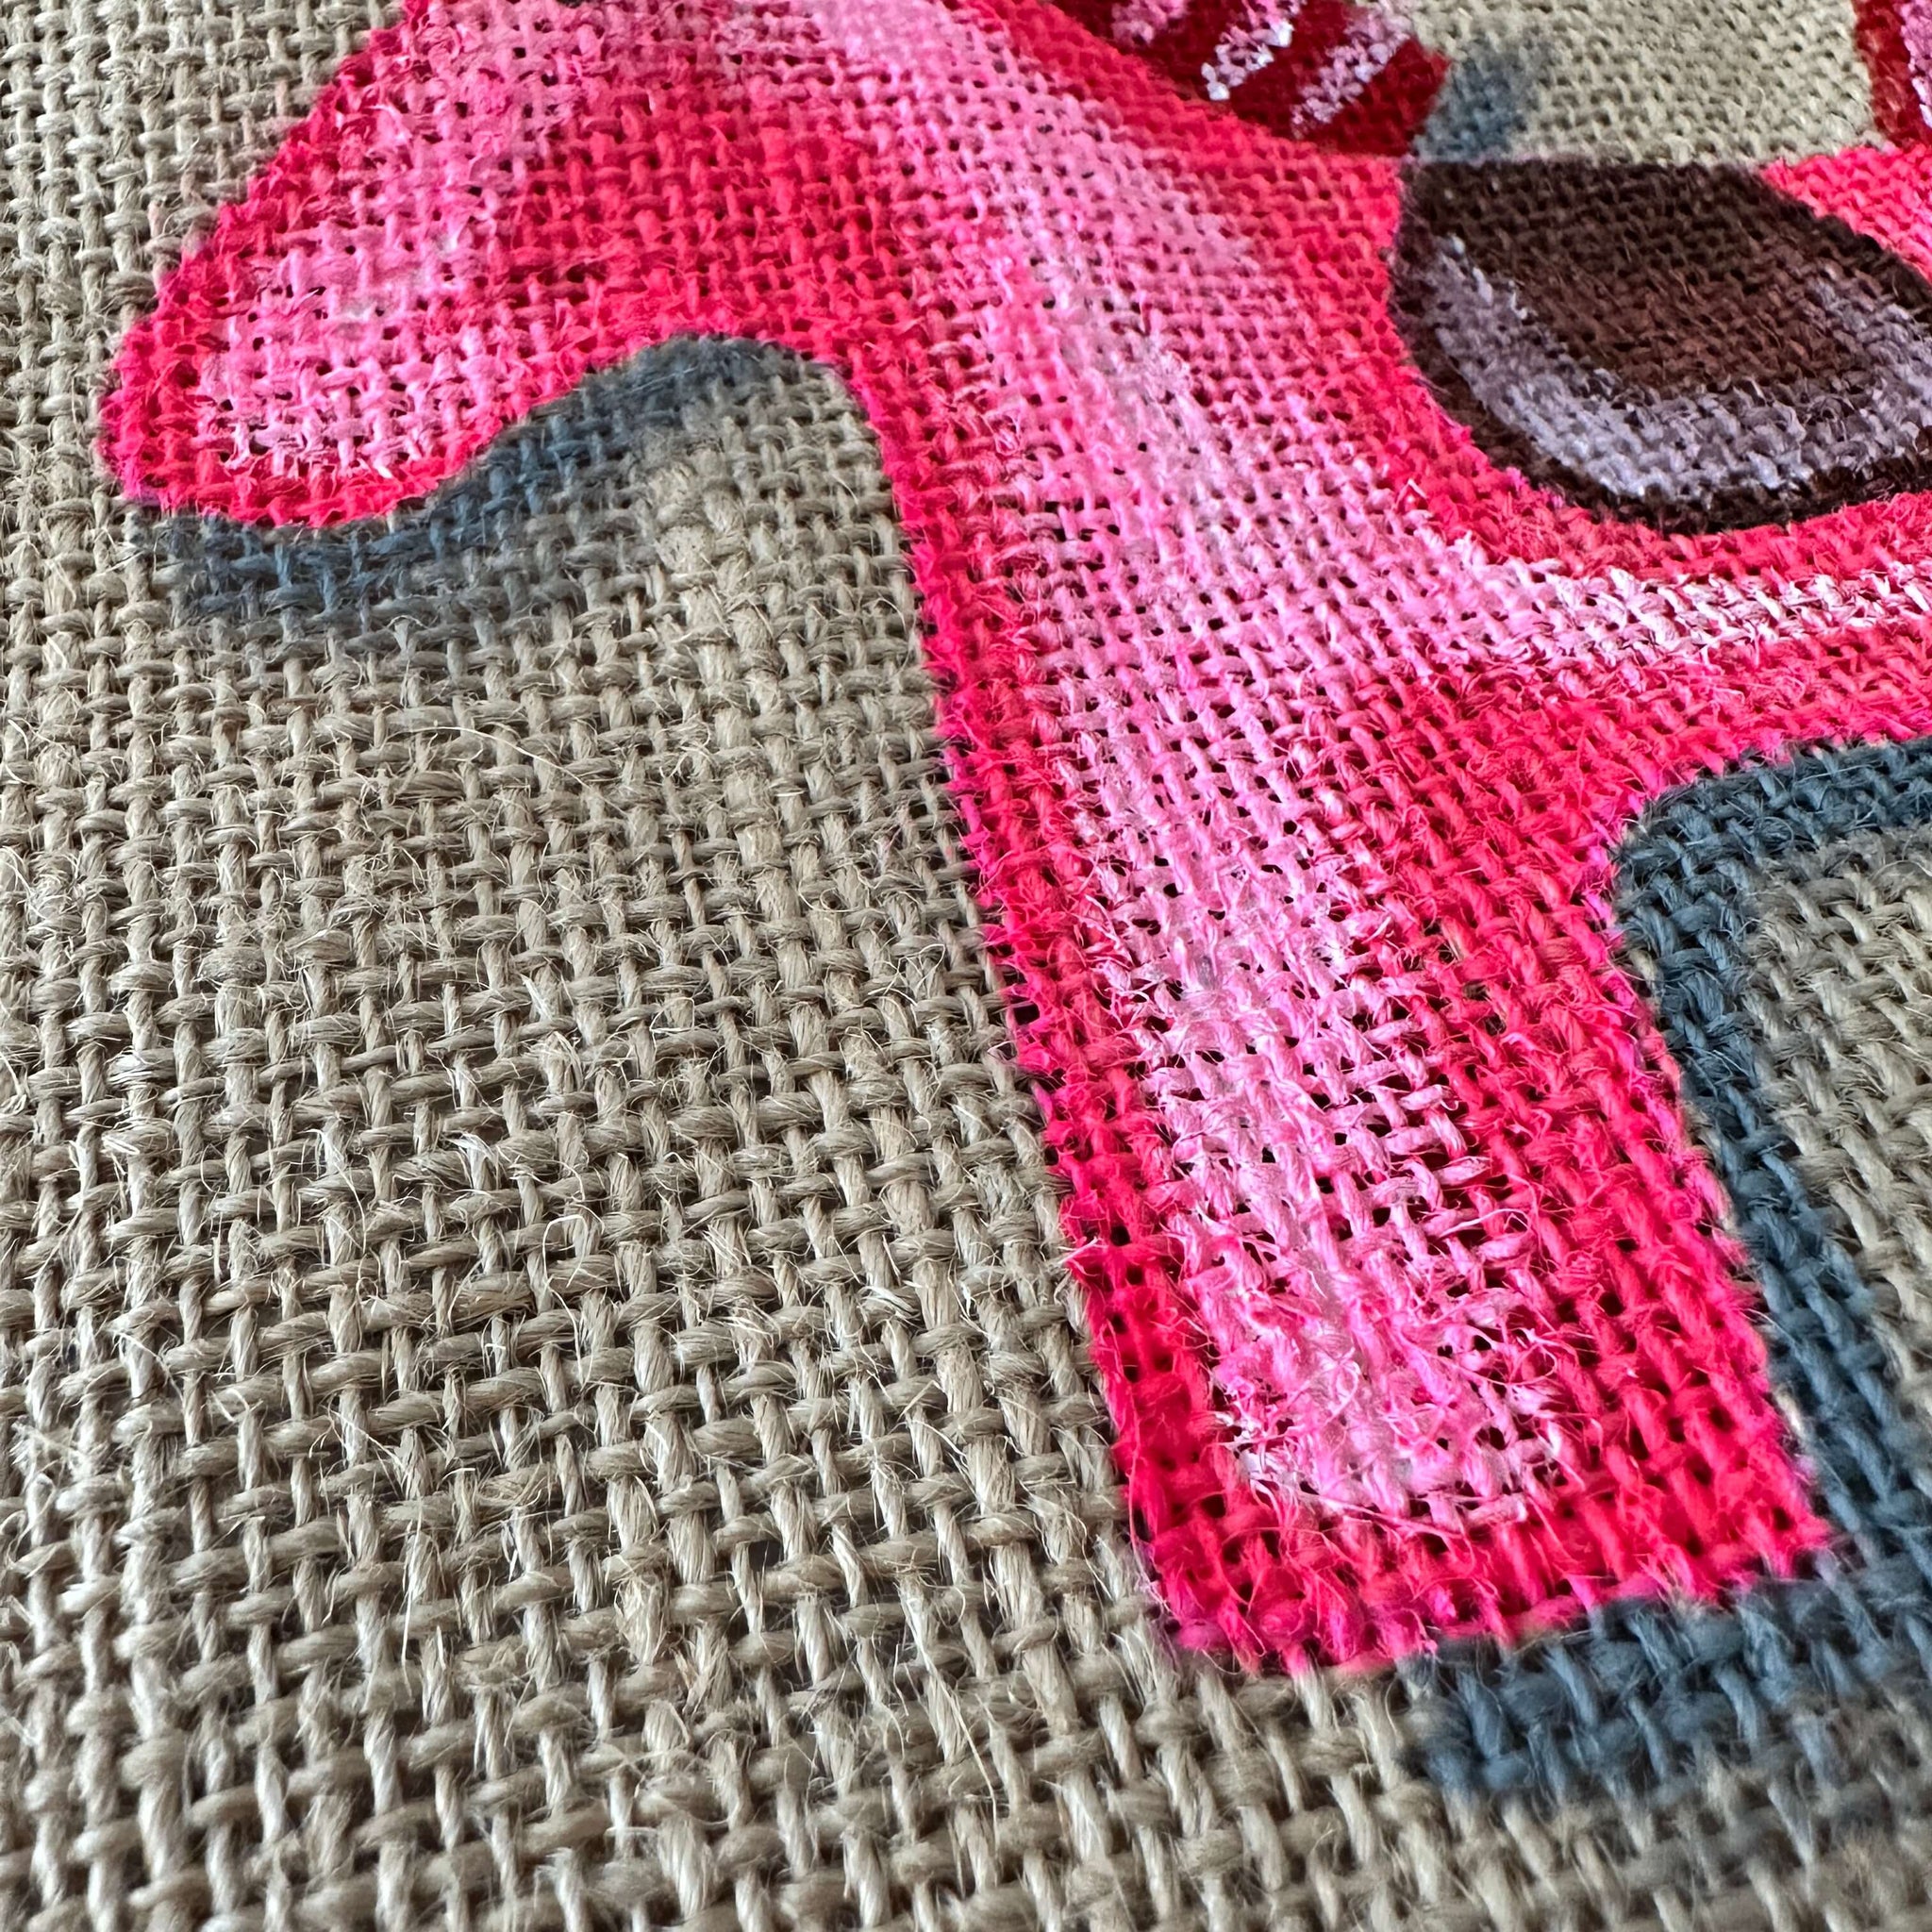 Art Bag "Crazy in pink", 26x22cm